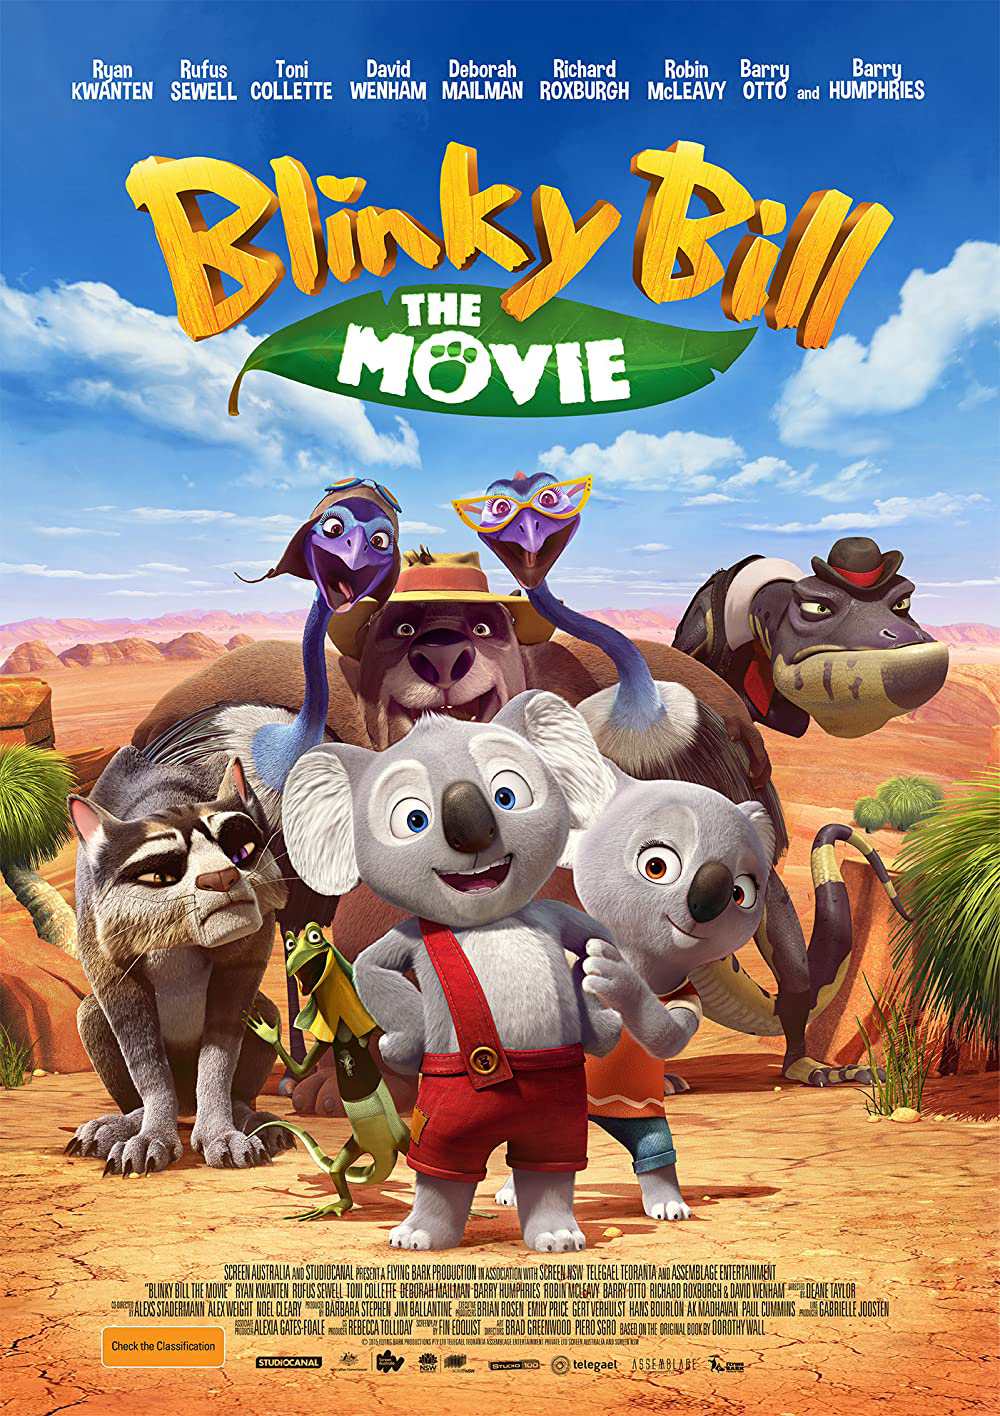 Poster Phim Cuộc Phiêu Lưu Của Blinky Bill (Blinky Bill The Movie)